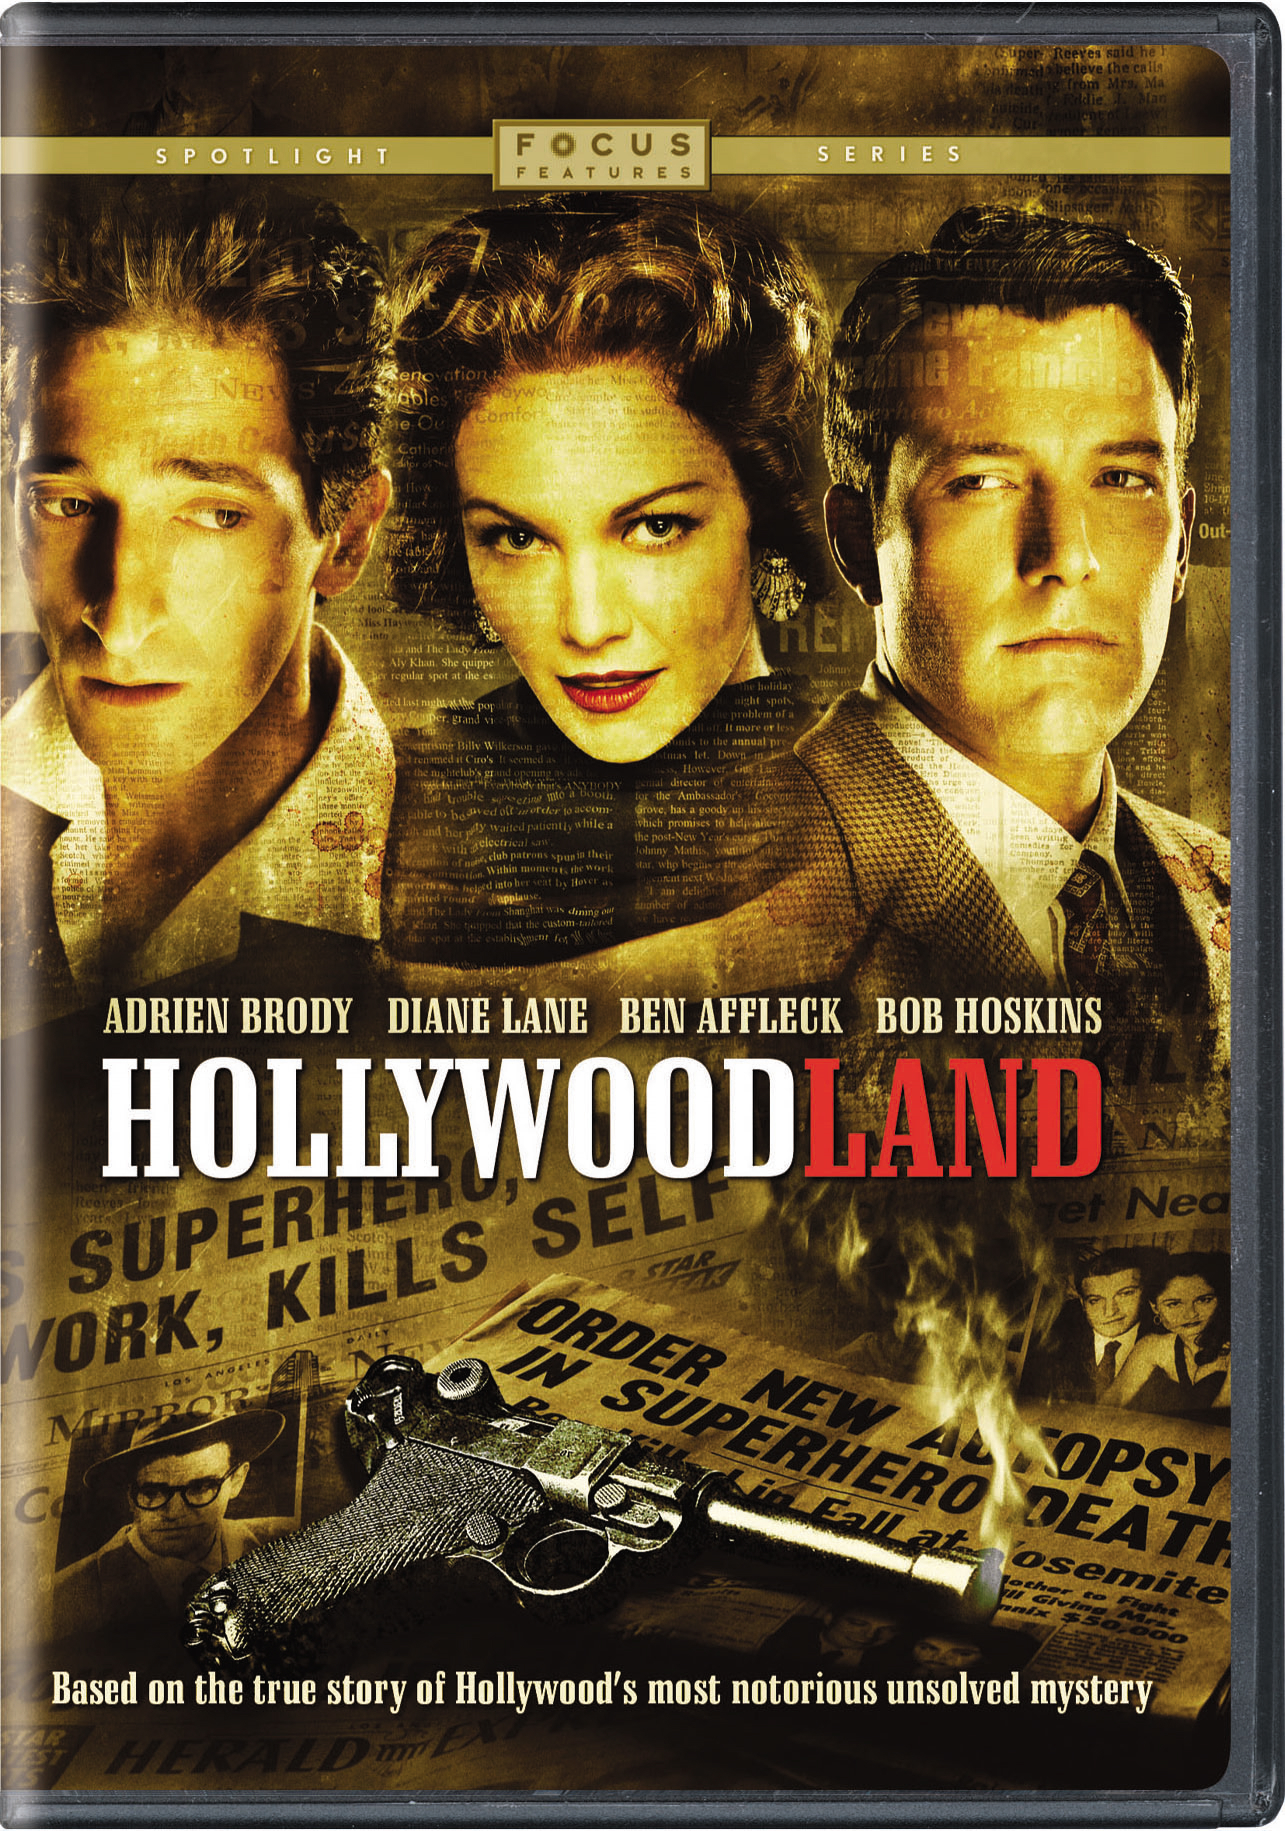 Hollywoodland (DVD Widescreen Spotlight Series) - DVD [ 2006 ]  - Drama Movies On DVD - Movies On GRUV